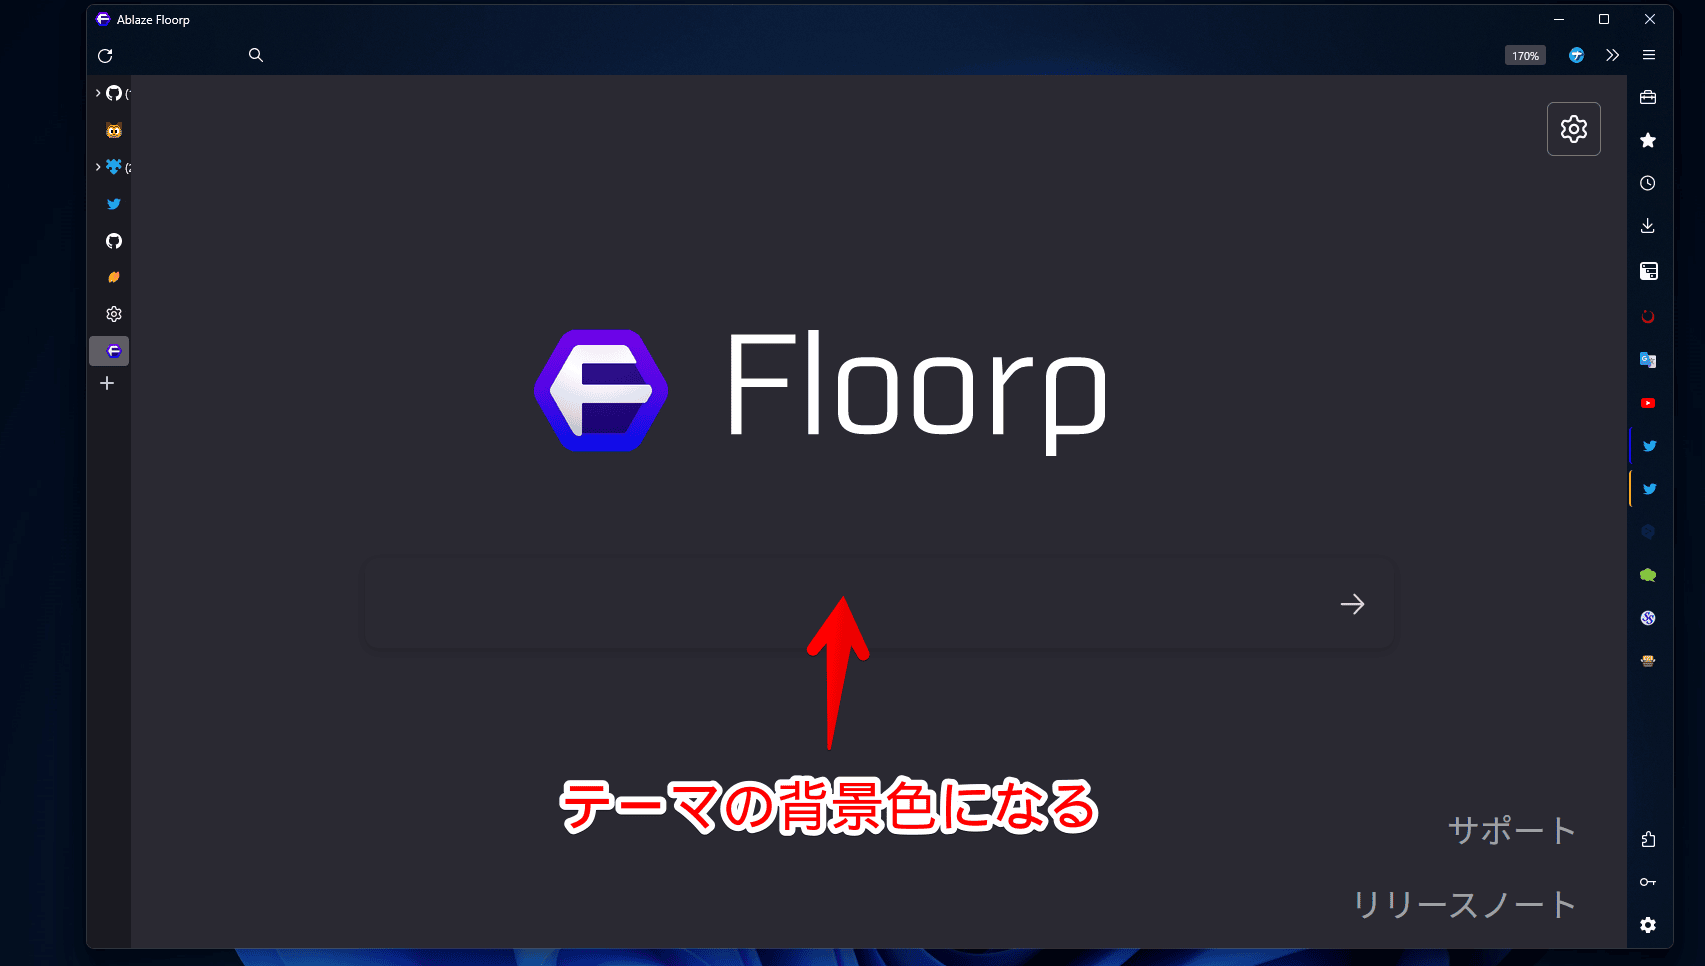 「Floorp」の新しいタブの背景を黒にした画像